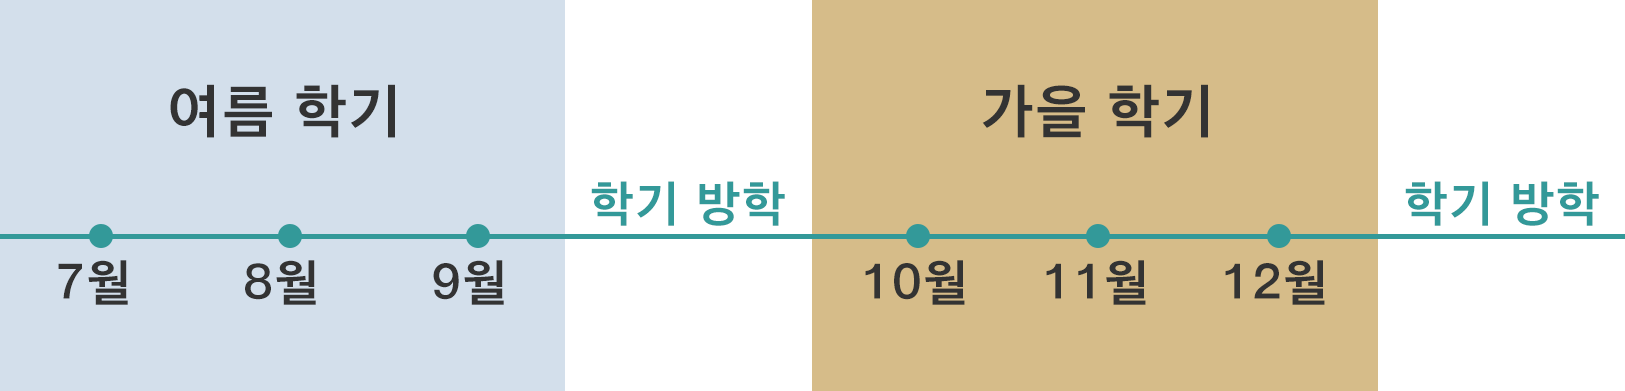 여름 학기（7〜9월）→학기 방학→가을 학기（10〜12월）→학기 방학